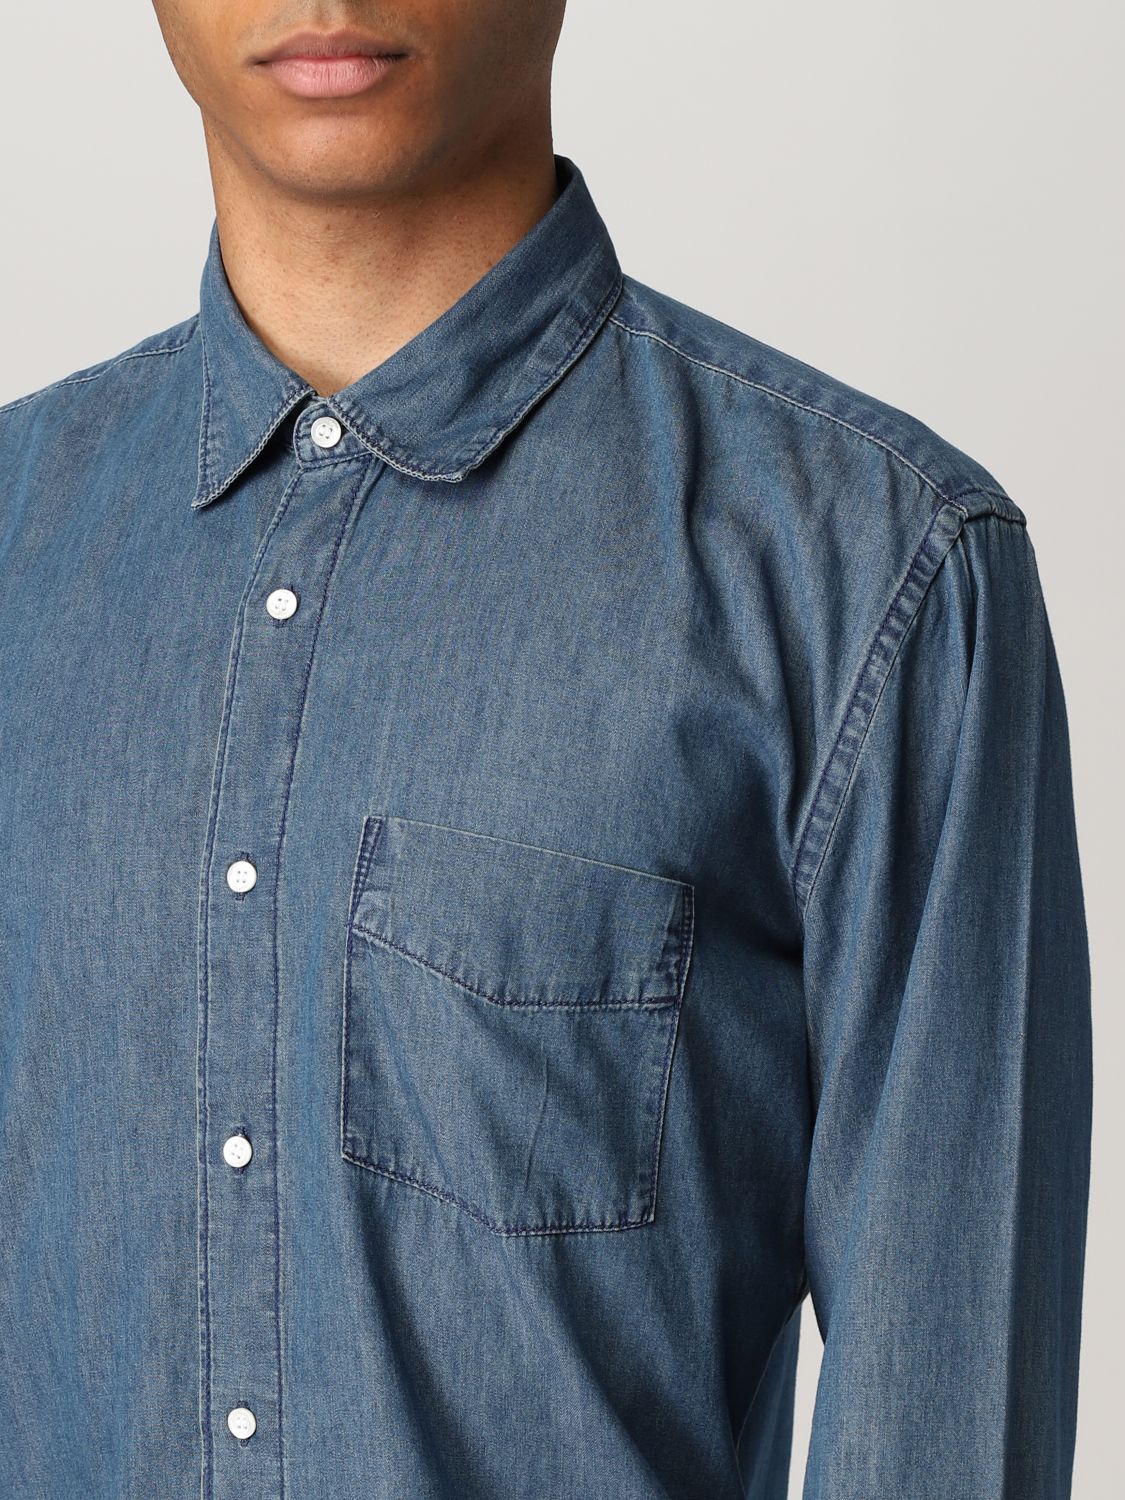 Shirt Aspesi: Aspesi shirt for man blue 3